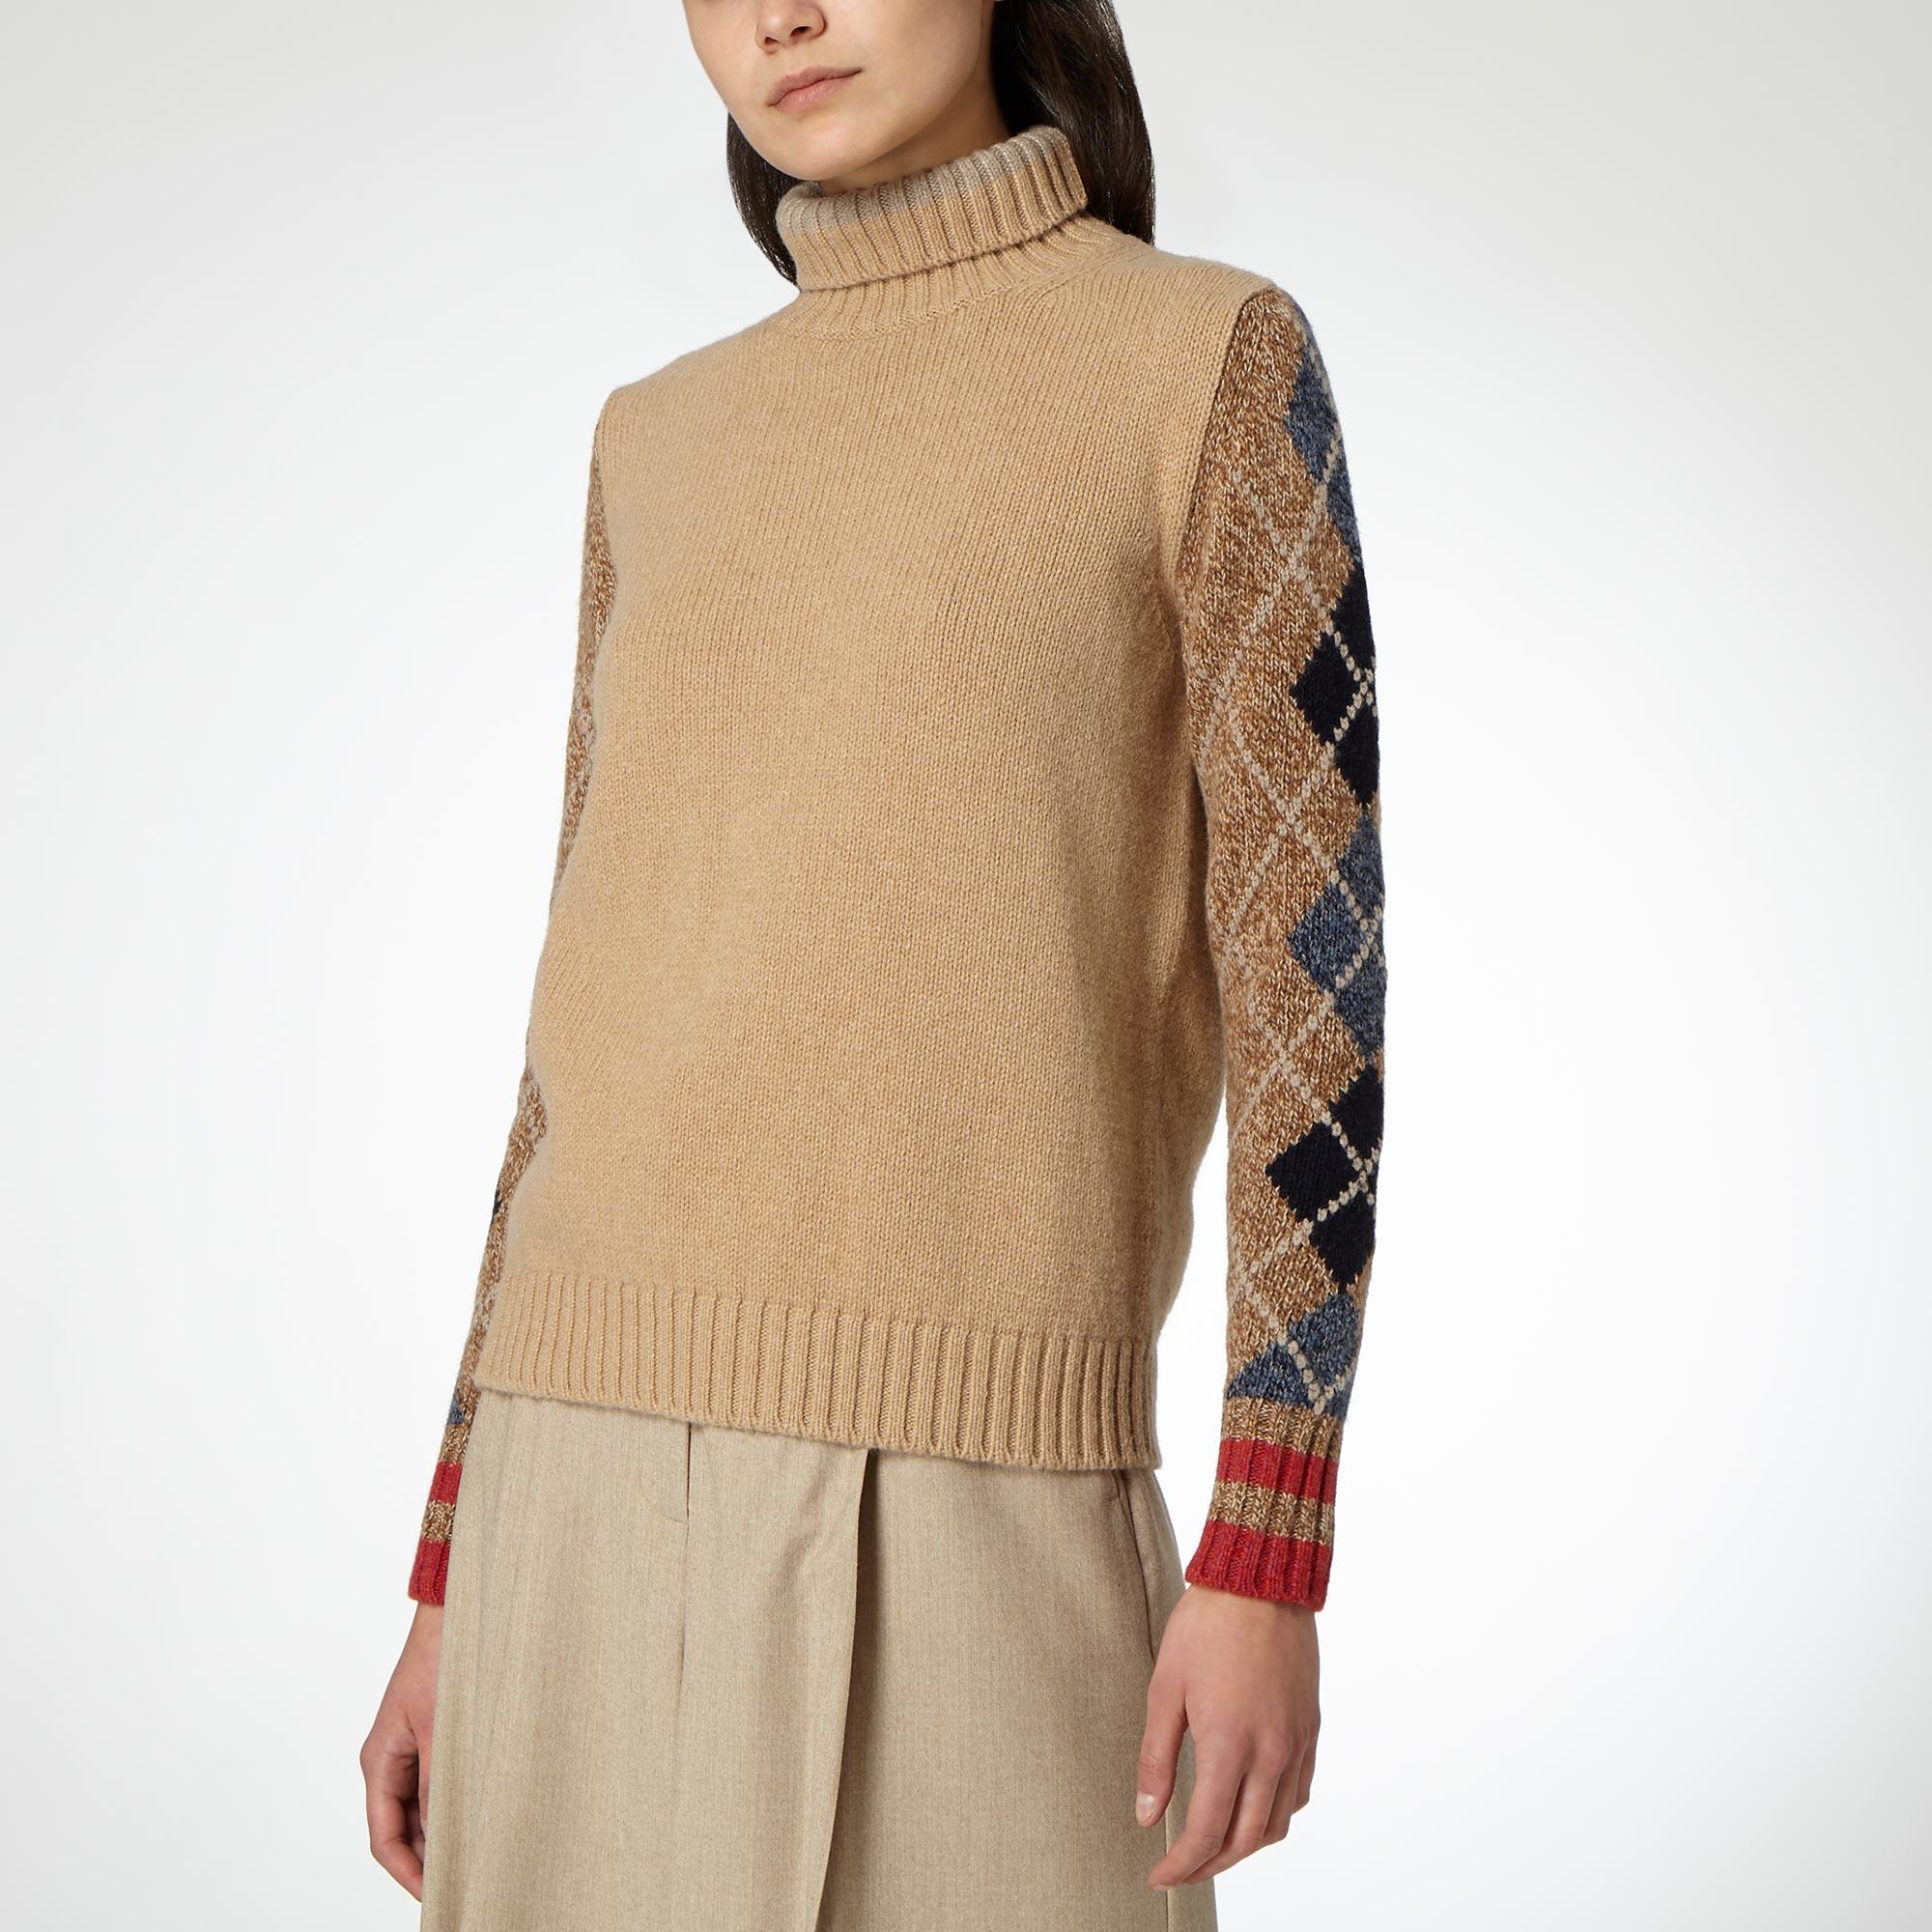 Nadir Sweater